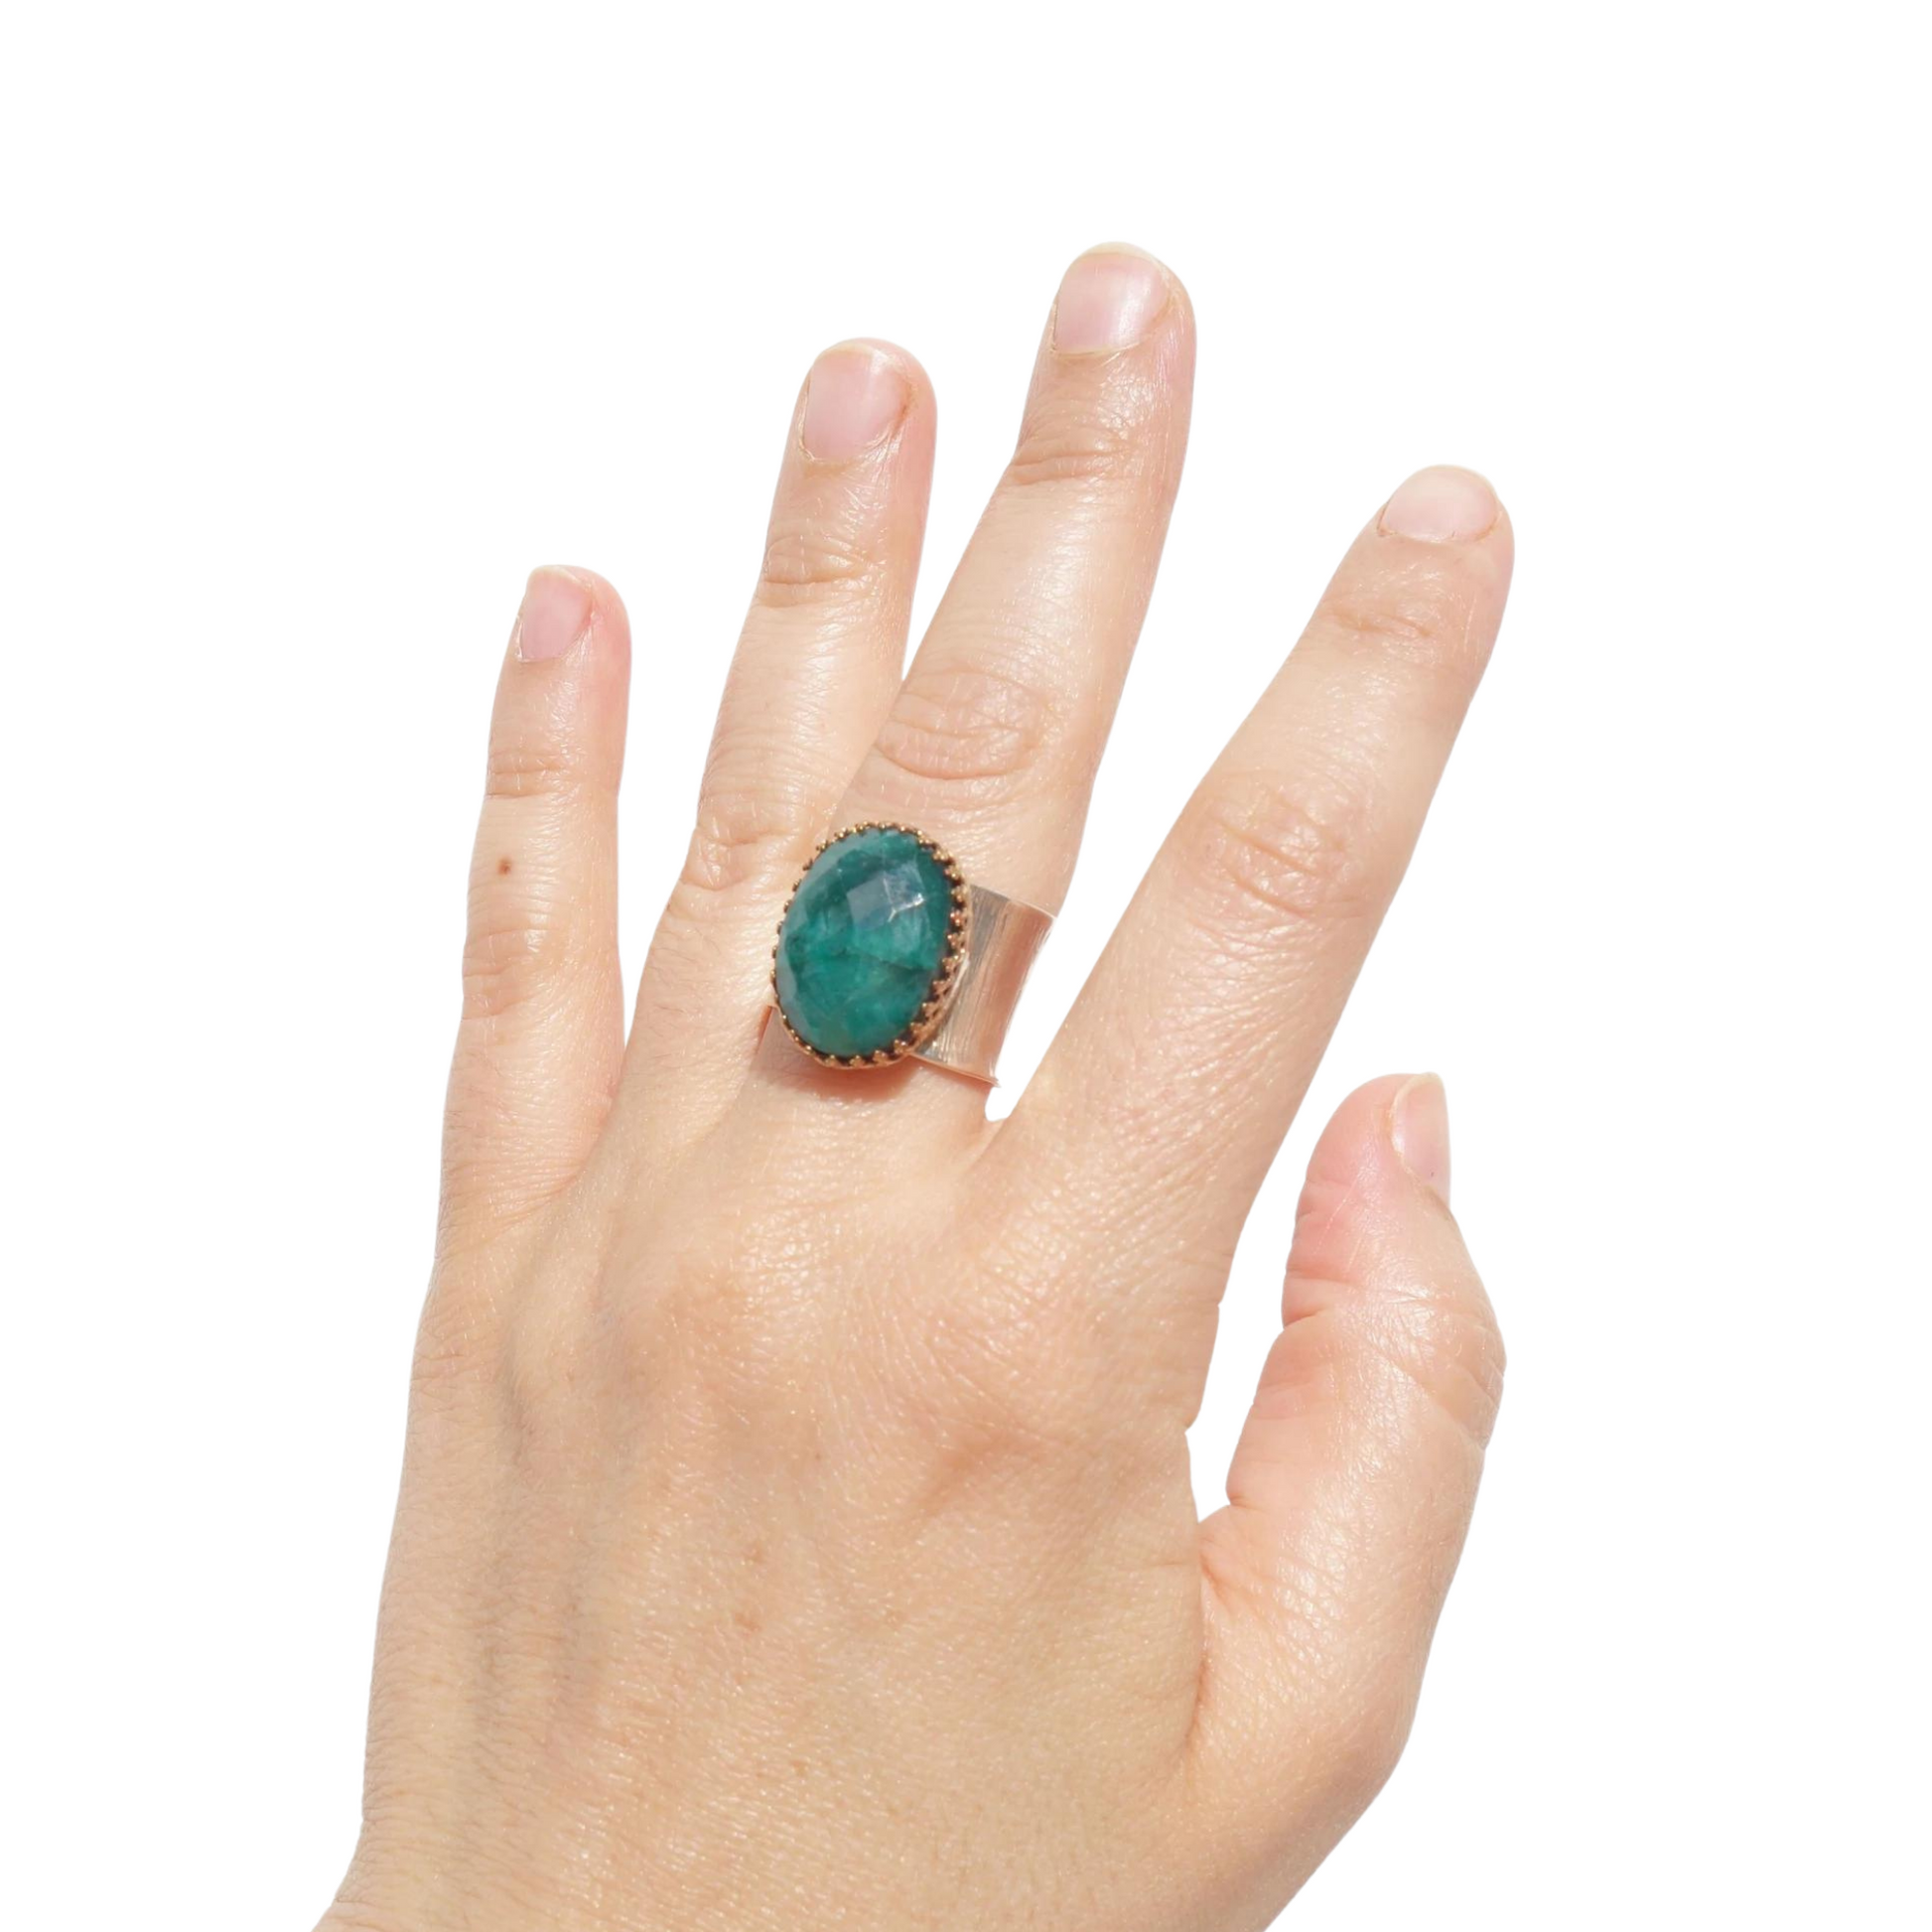 Details more than 163 wearing emerald ring benefits best - xkldase.edu.vn